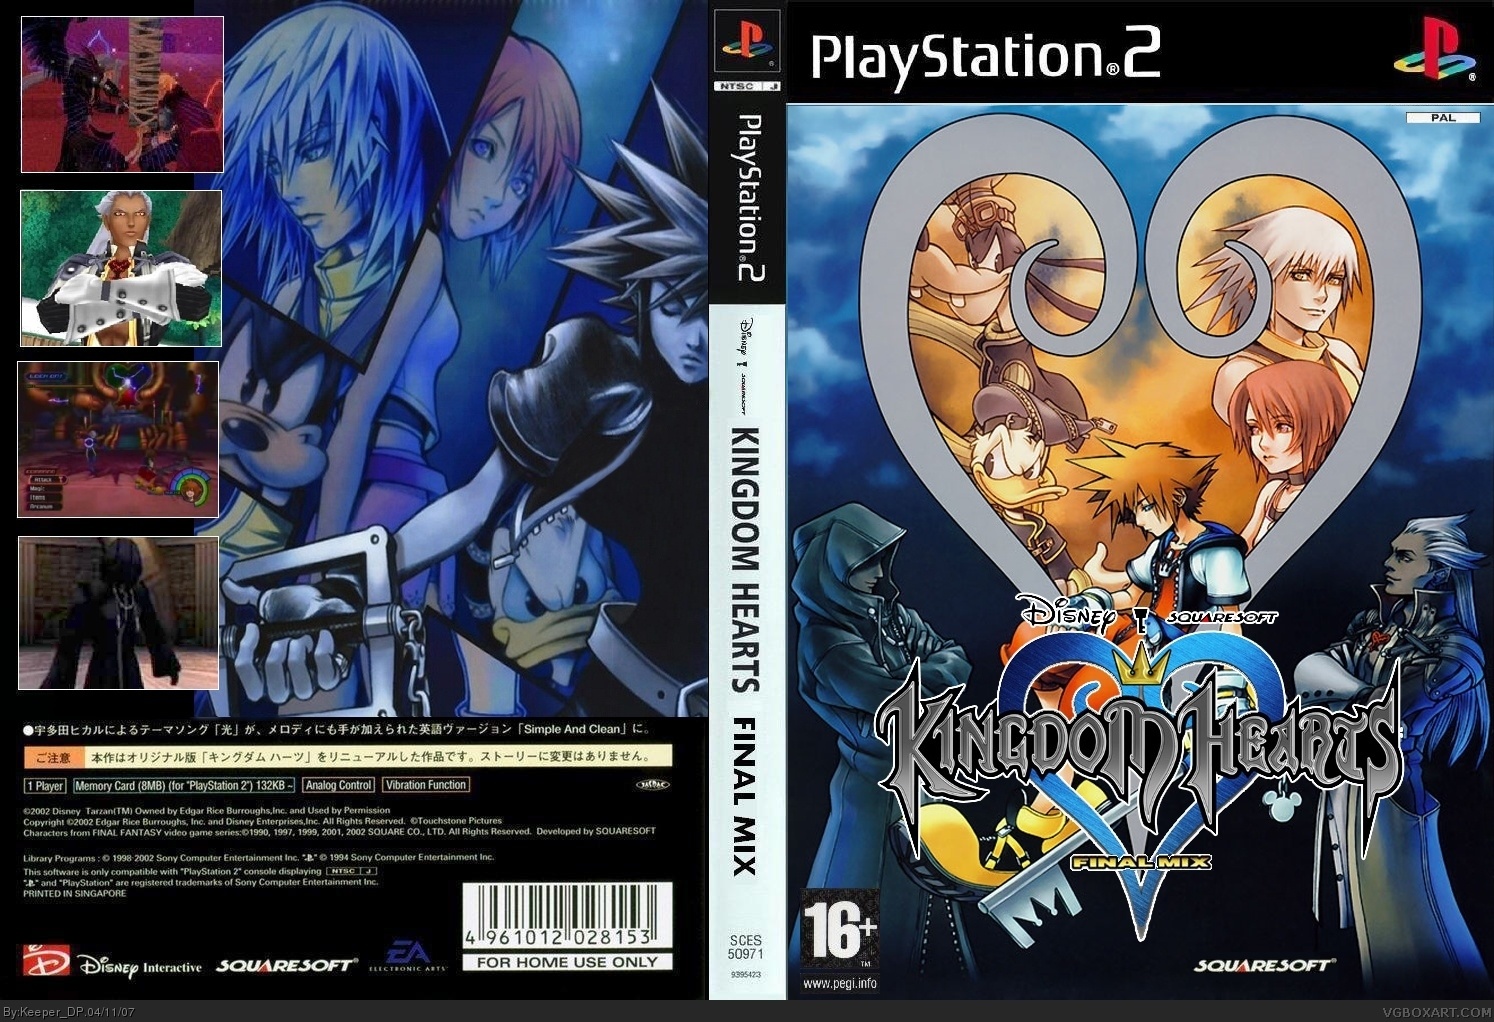 Kingdom Hearts: Final Mix PlayStation 2 Box Art Cover by Keeper_DP